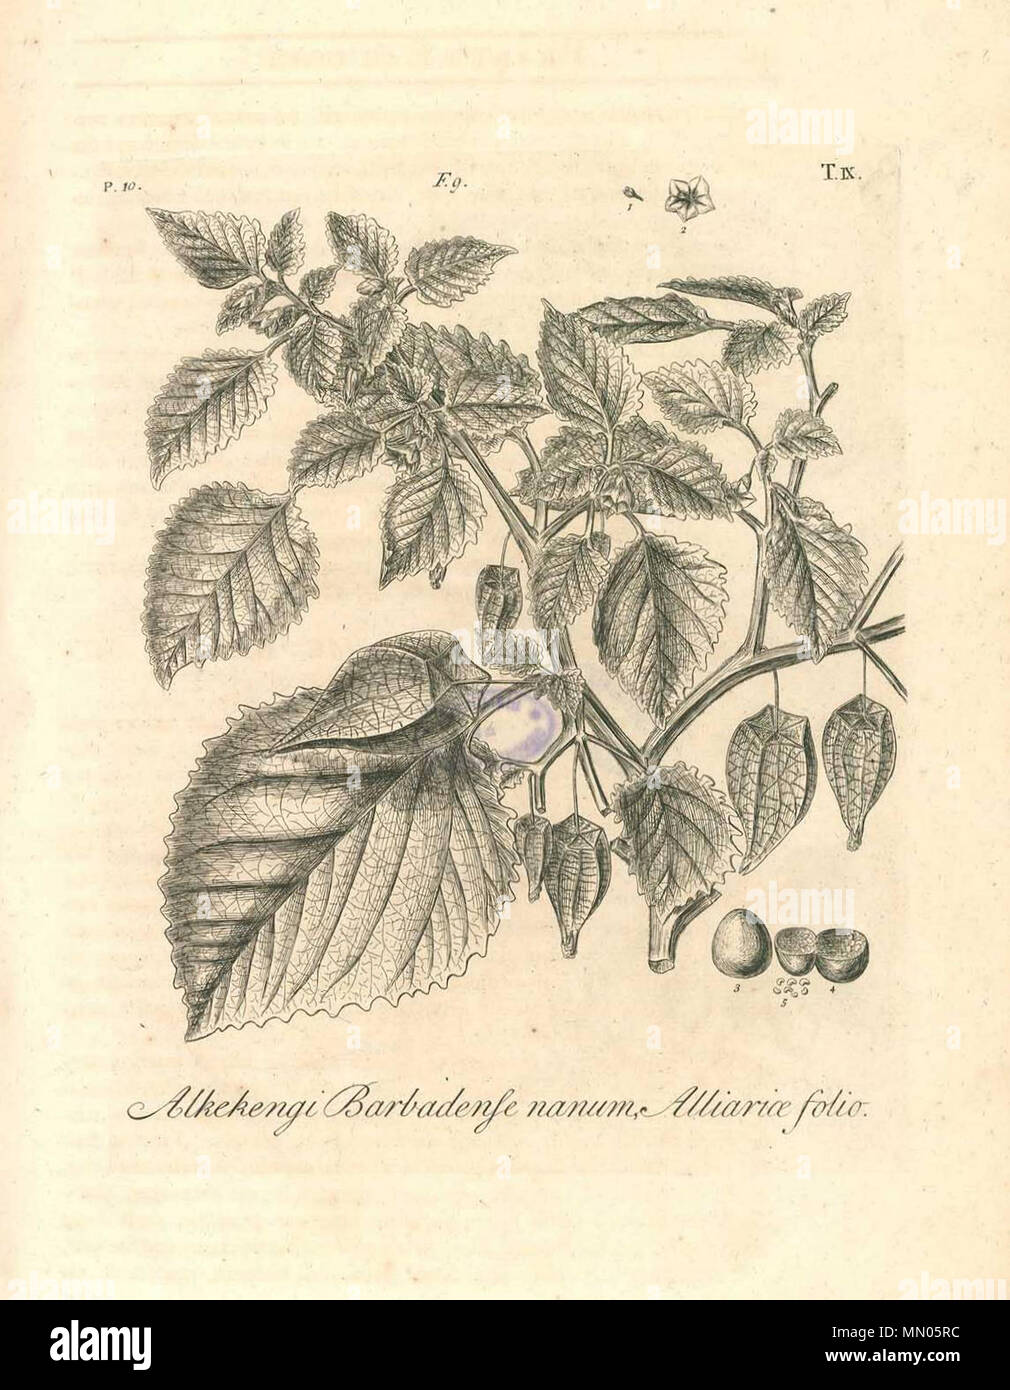 . English: Dillenius, J.J. (1732), Hortus Elthamensis plate 9, depicting Alkekengi Barbadense nanum, Alliariae folio, now know as Physalis pubescens L. Nederlands: Dillenius, J.J. (1732), Hortus Elthamensis plaat 9, met een afbeelding van Alkekengi Barbadense nanum, Alliariae folio, tegenwoordig bekend als Physalis pubescens L. Deutsch: Dillenius, J.J. (1732), Hortus Elthamensis Tafel 9, mit einer Darstellung von Alkekengi Barbadense nanum, Alliariae folio, jetzt bekannt als Physalis pubescens L. Français : Dillenius, J.J. (1732), Hortus Elthamensis lame 9, représentant Alkekengi Barbadense na Stock Photo